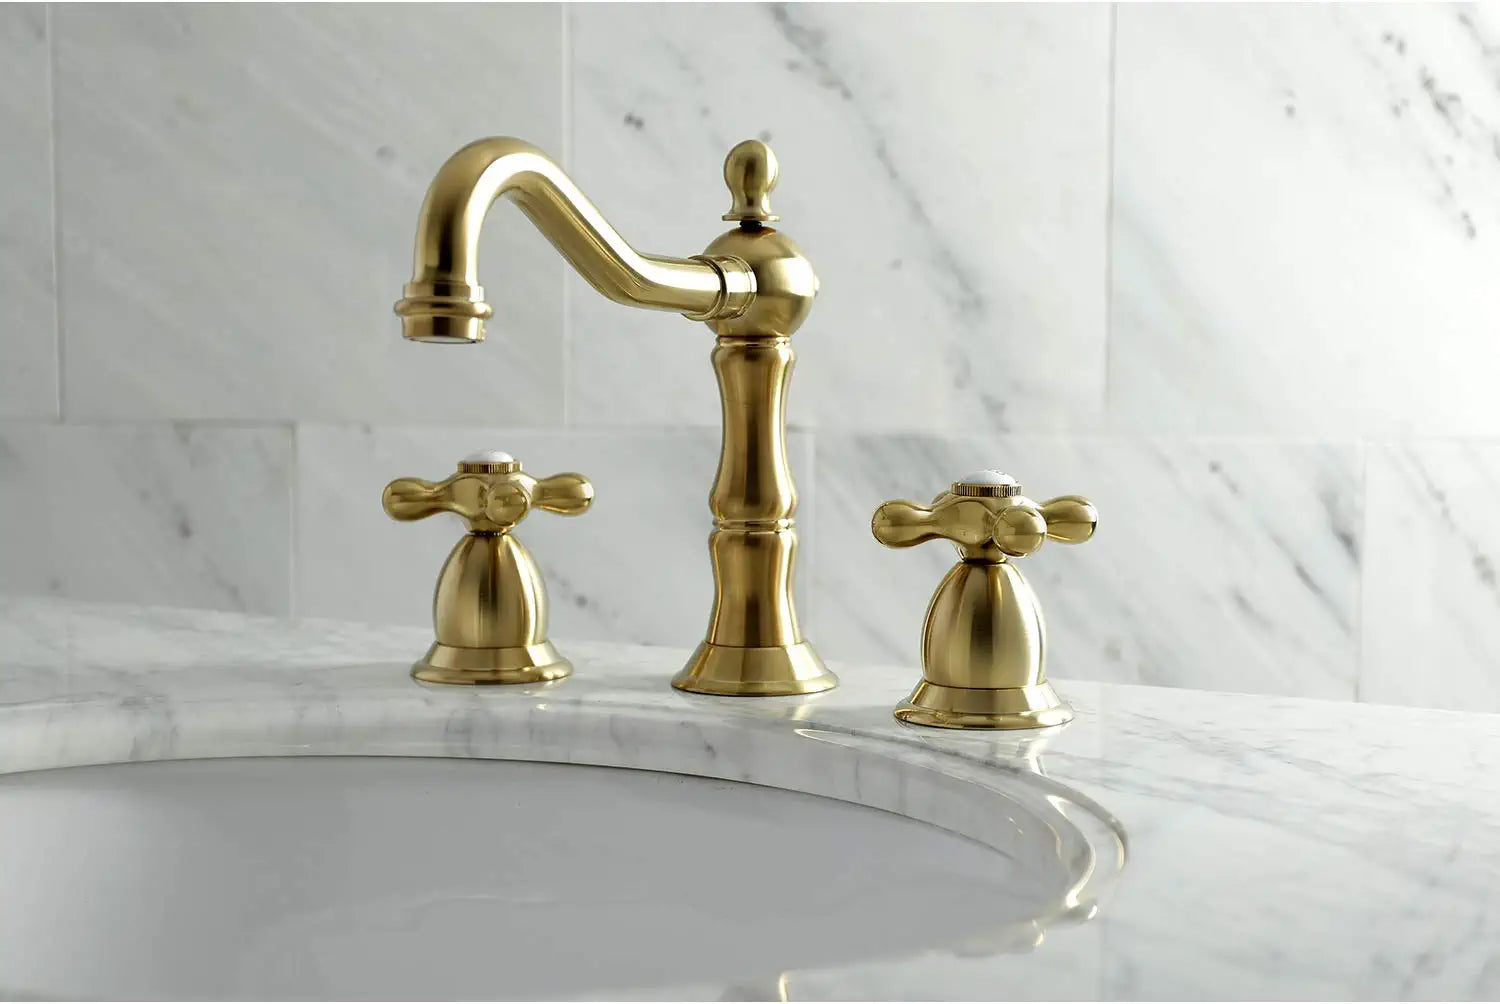 Kingston Brass KS1977AX 8 in. Widespread Bathroom Faucet, Brushed Brass